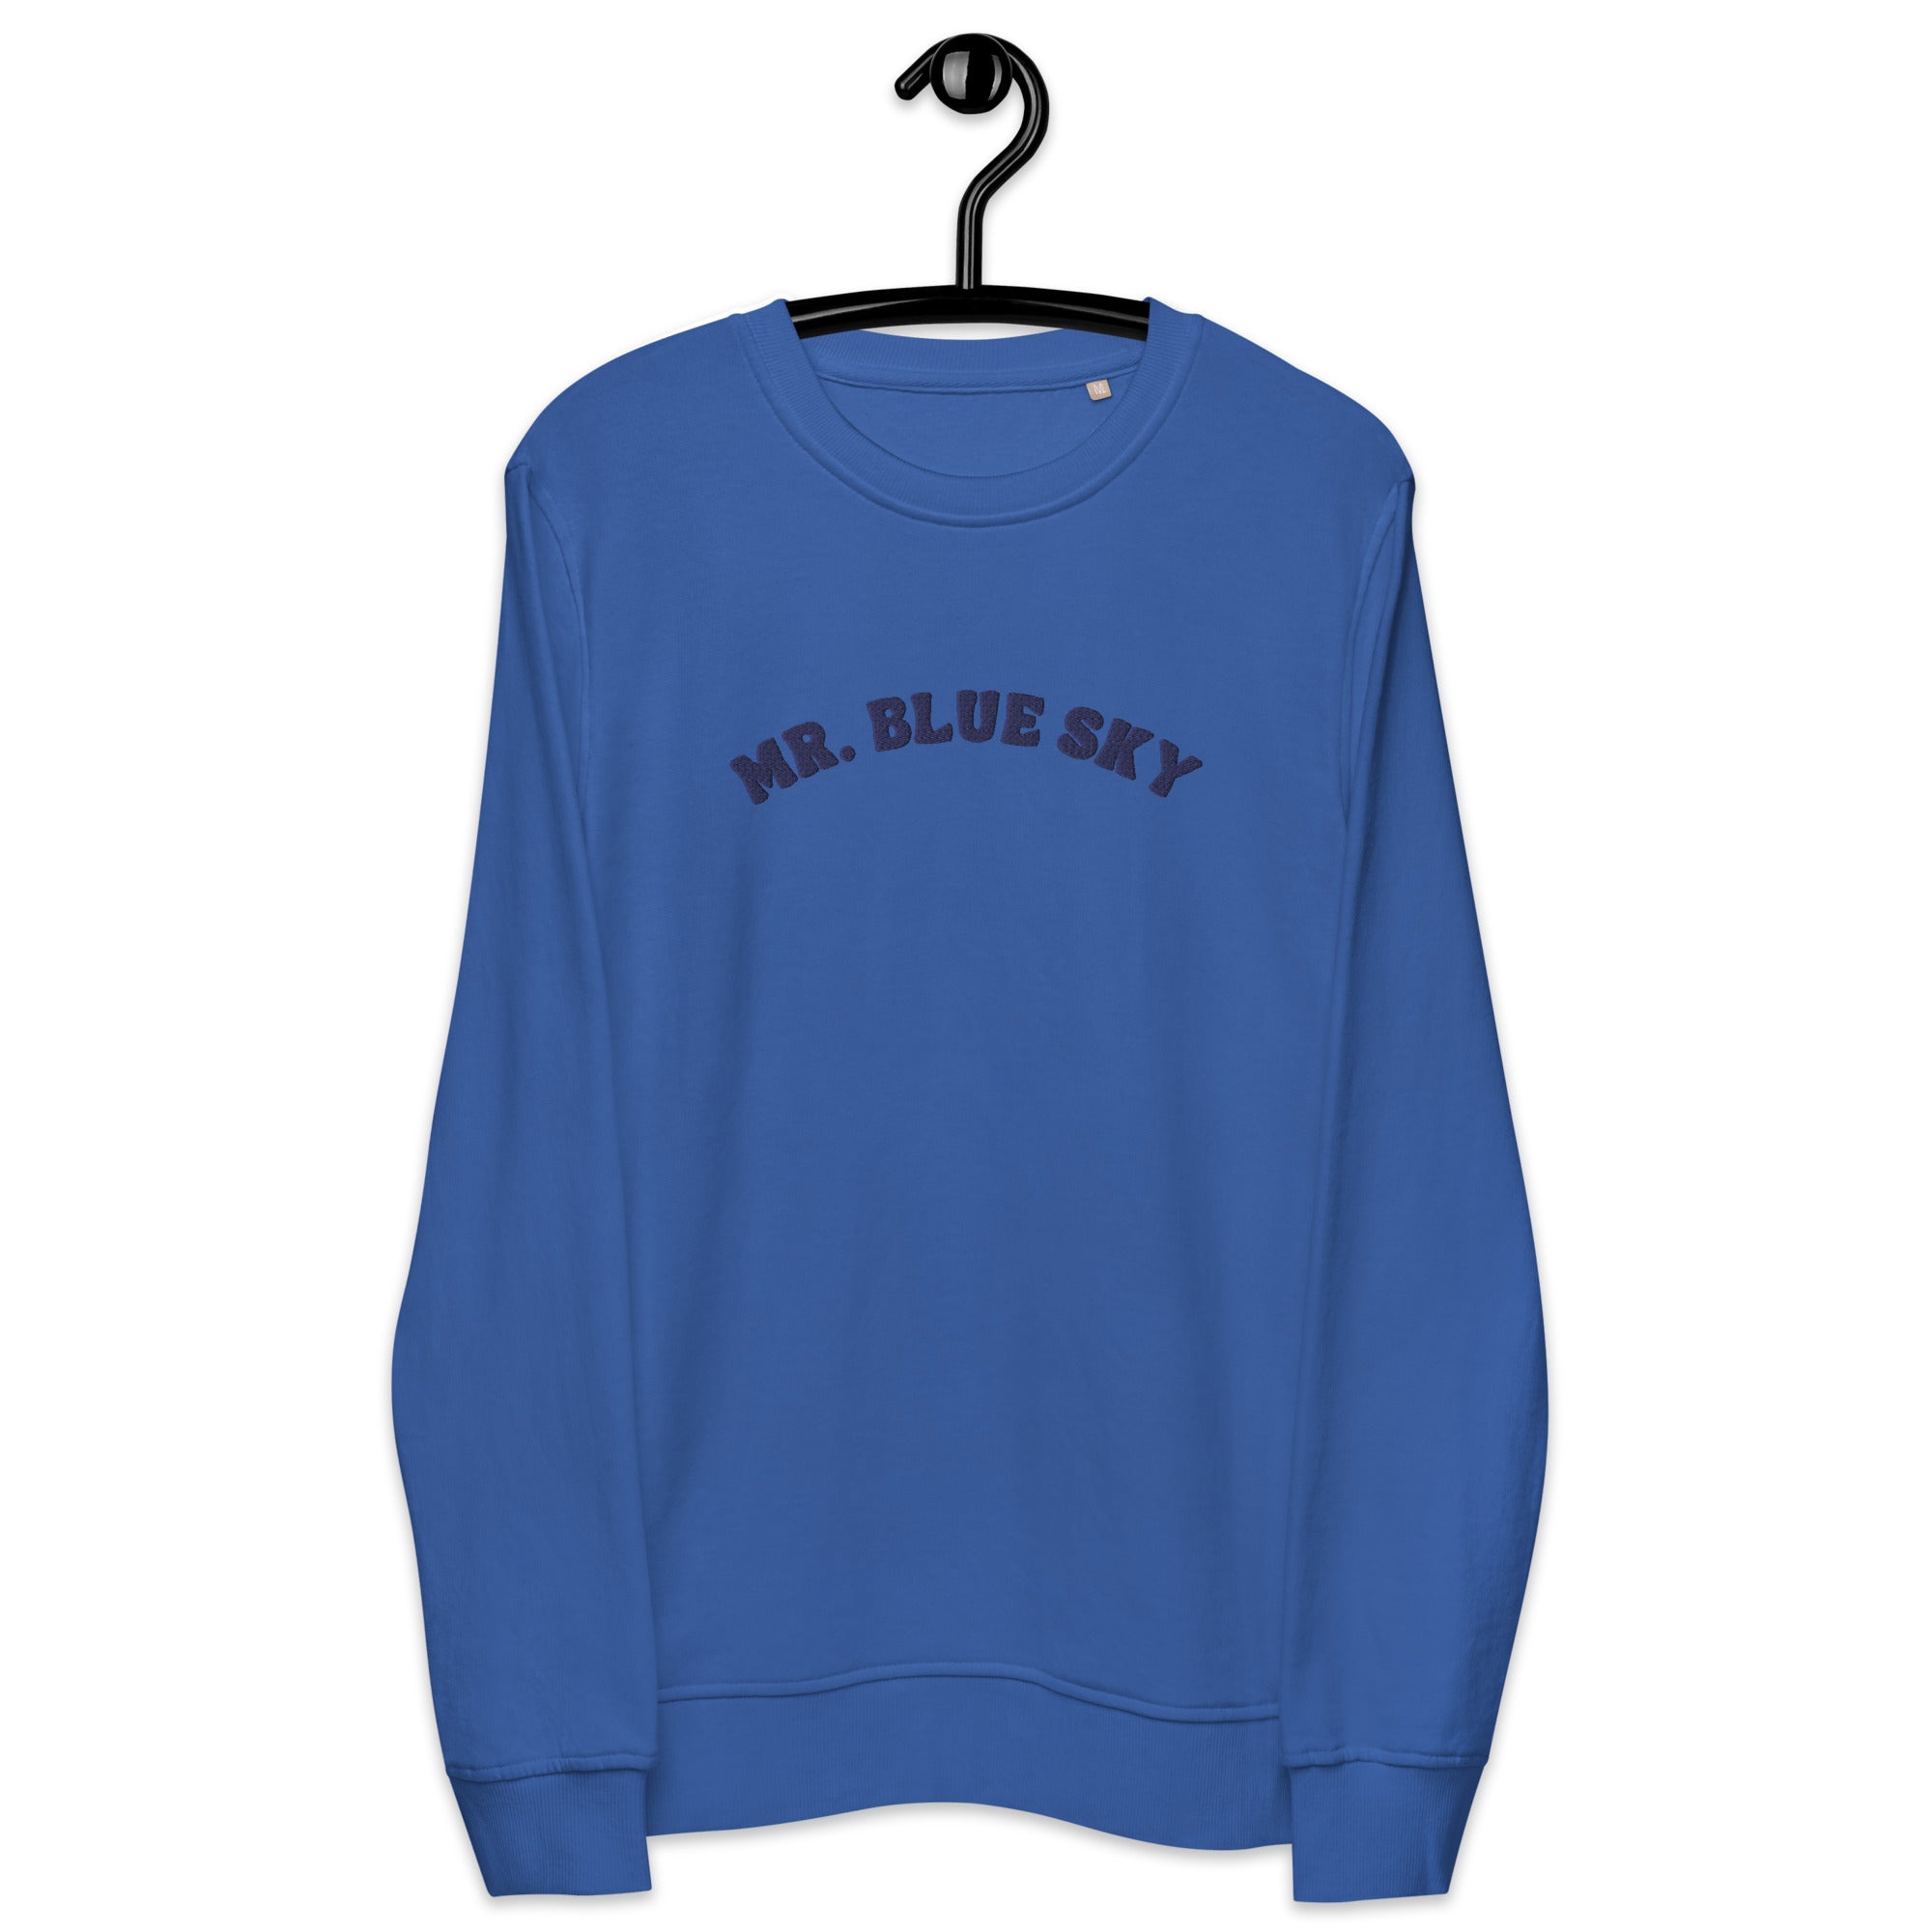 MR BLUE SKY 刺绣复古风格男女通用有机棉卫衣